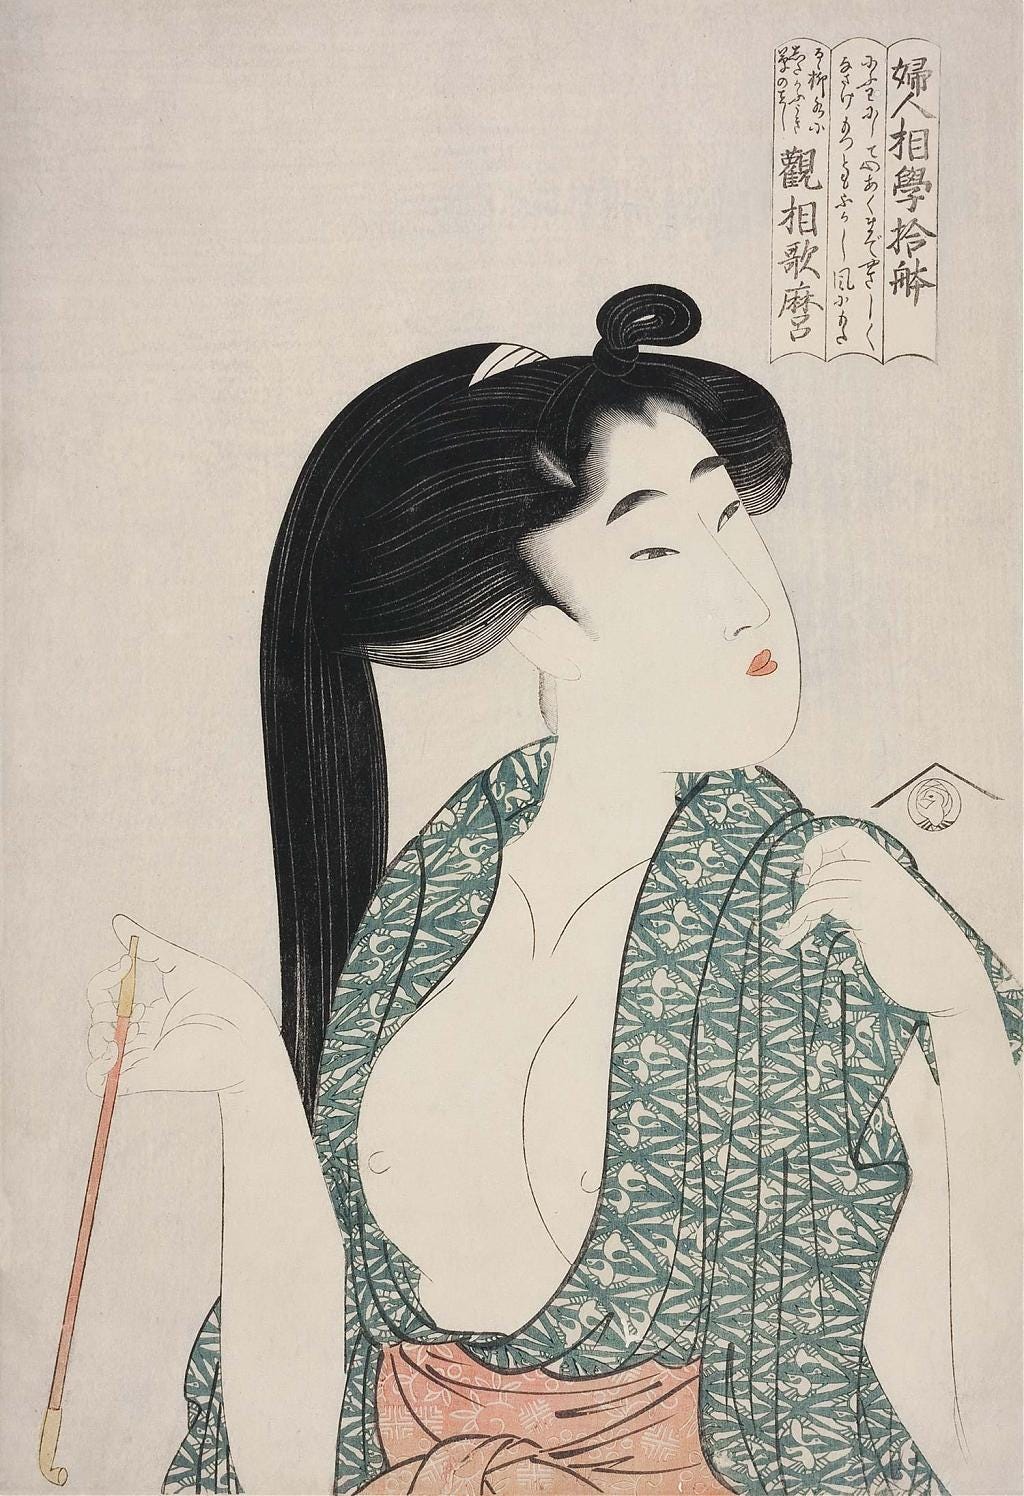 Woman with a kiseru pipe by Kitagawa Utamaro